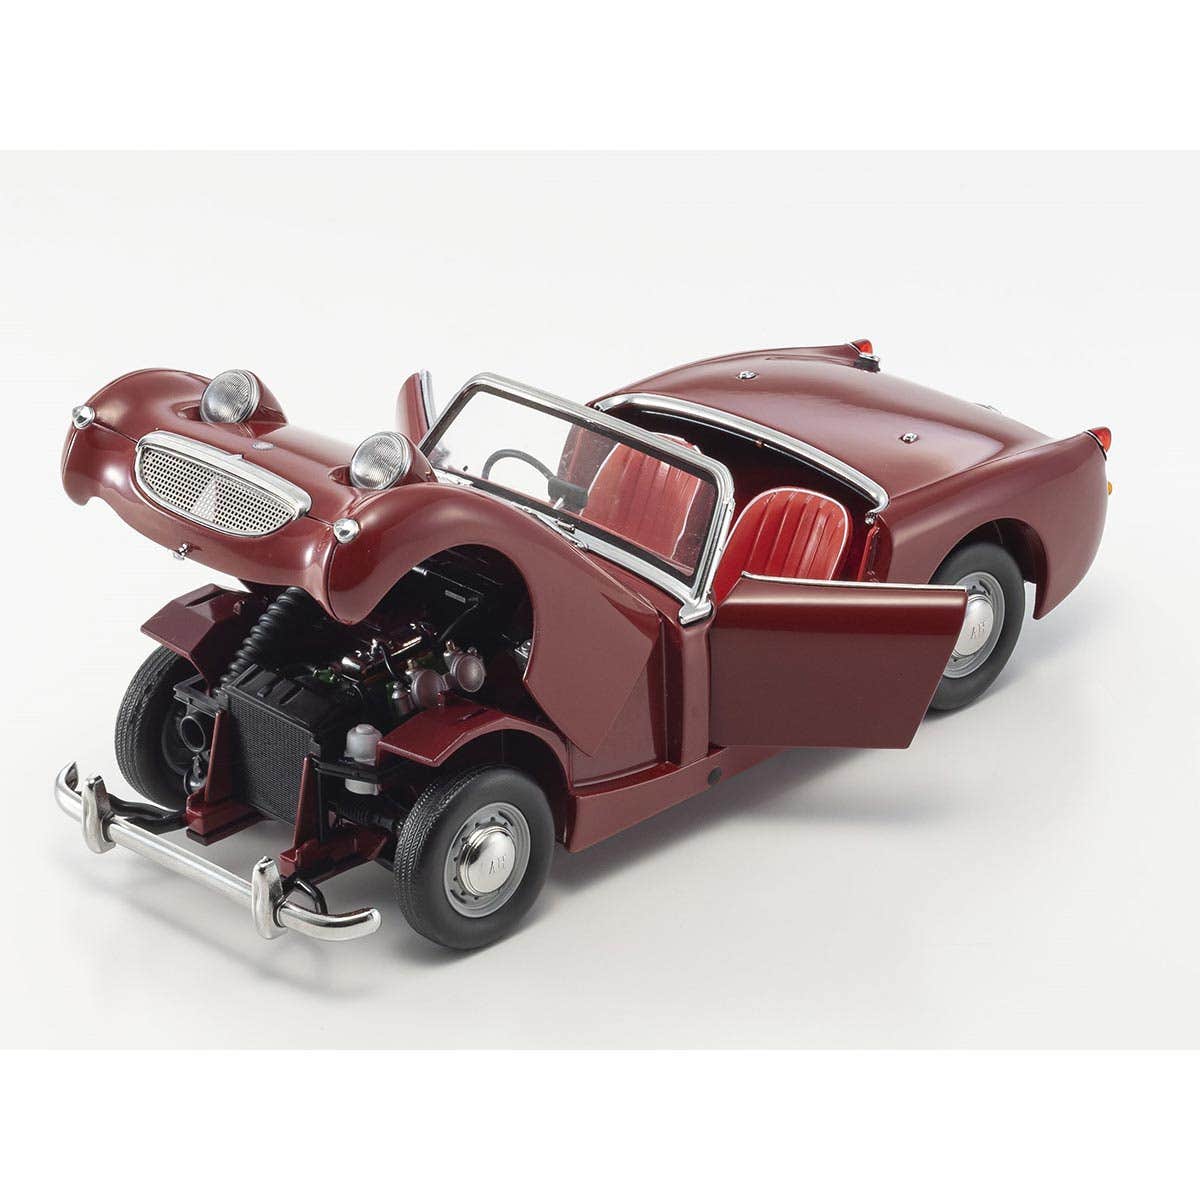 Austin Healey Sprite Mk-1 - Cherry Red - 1:18 Scale Diecast Model Car